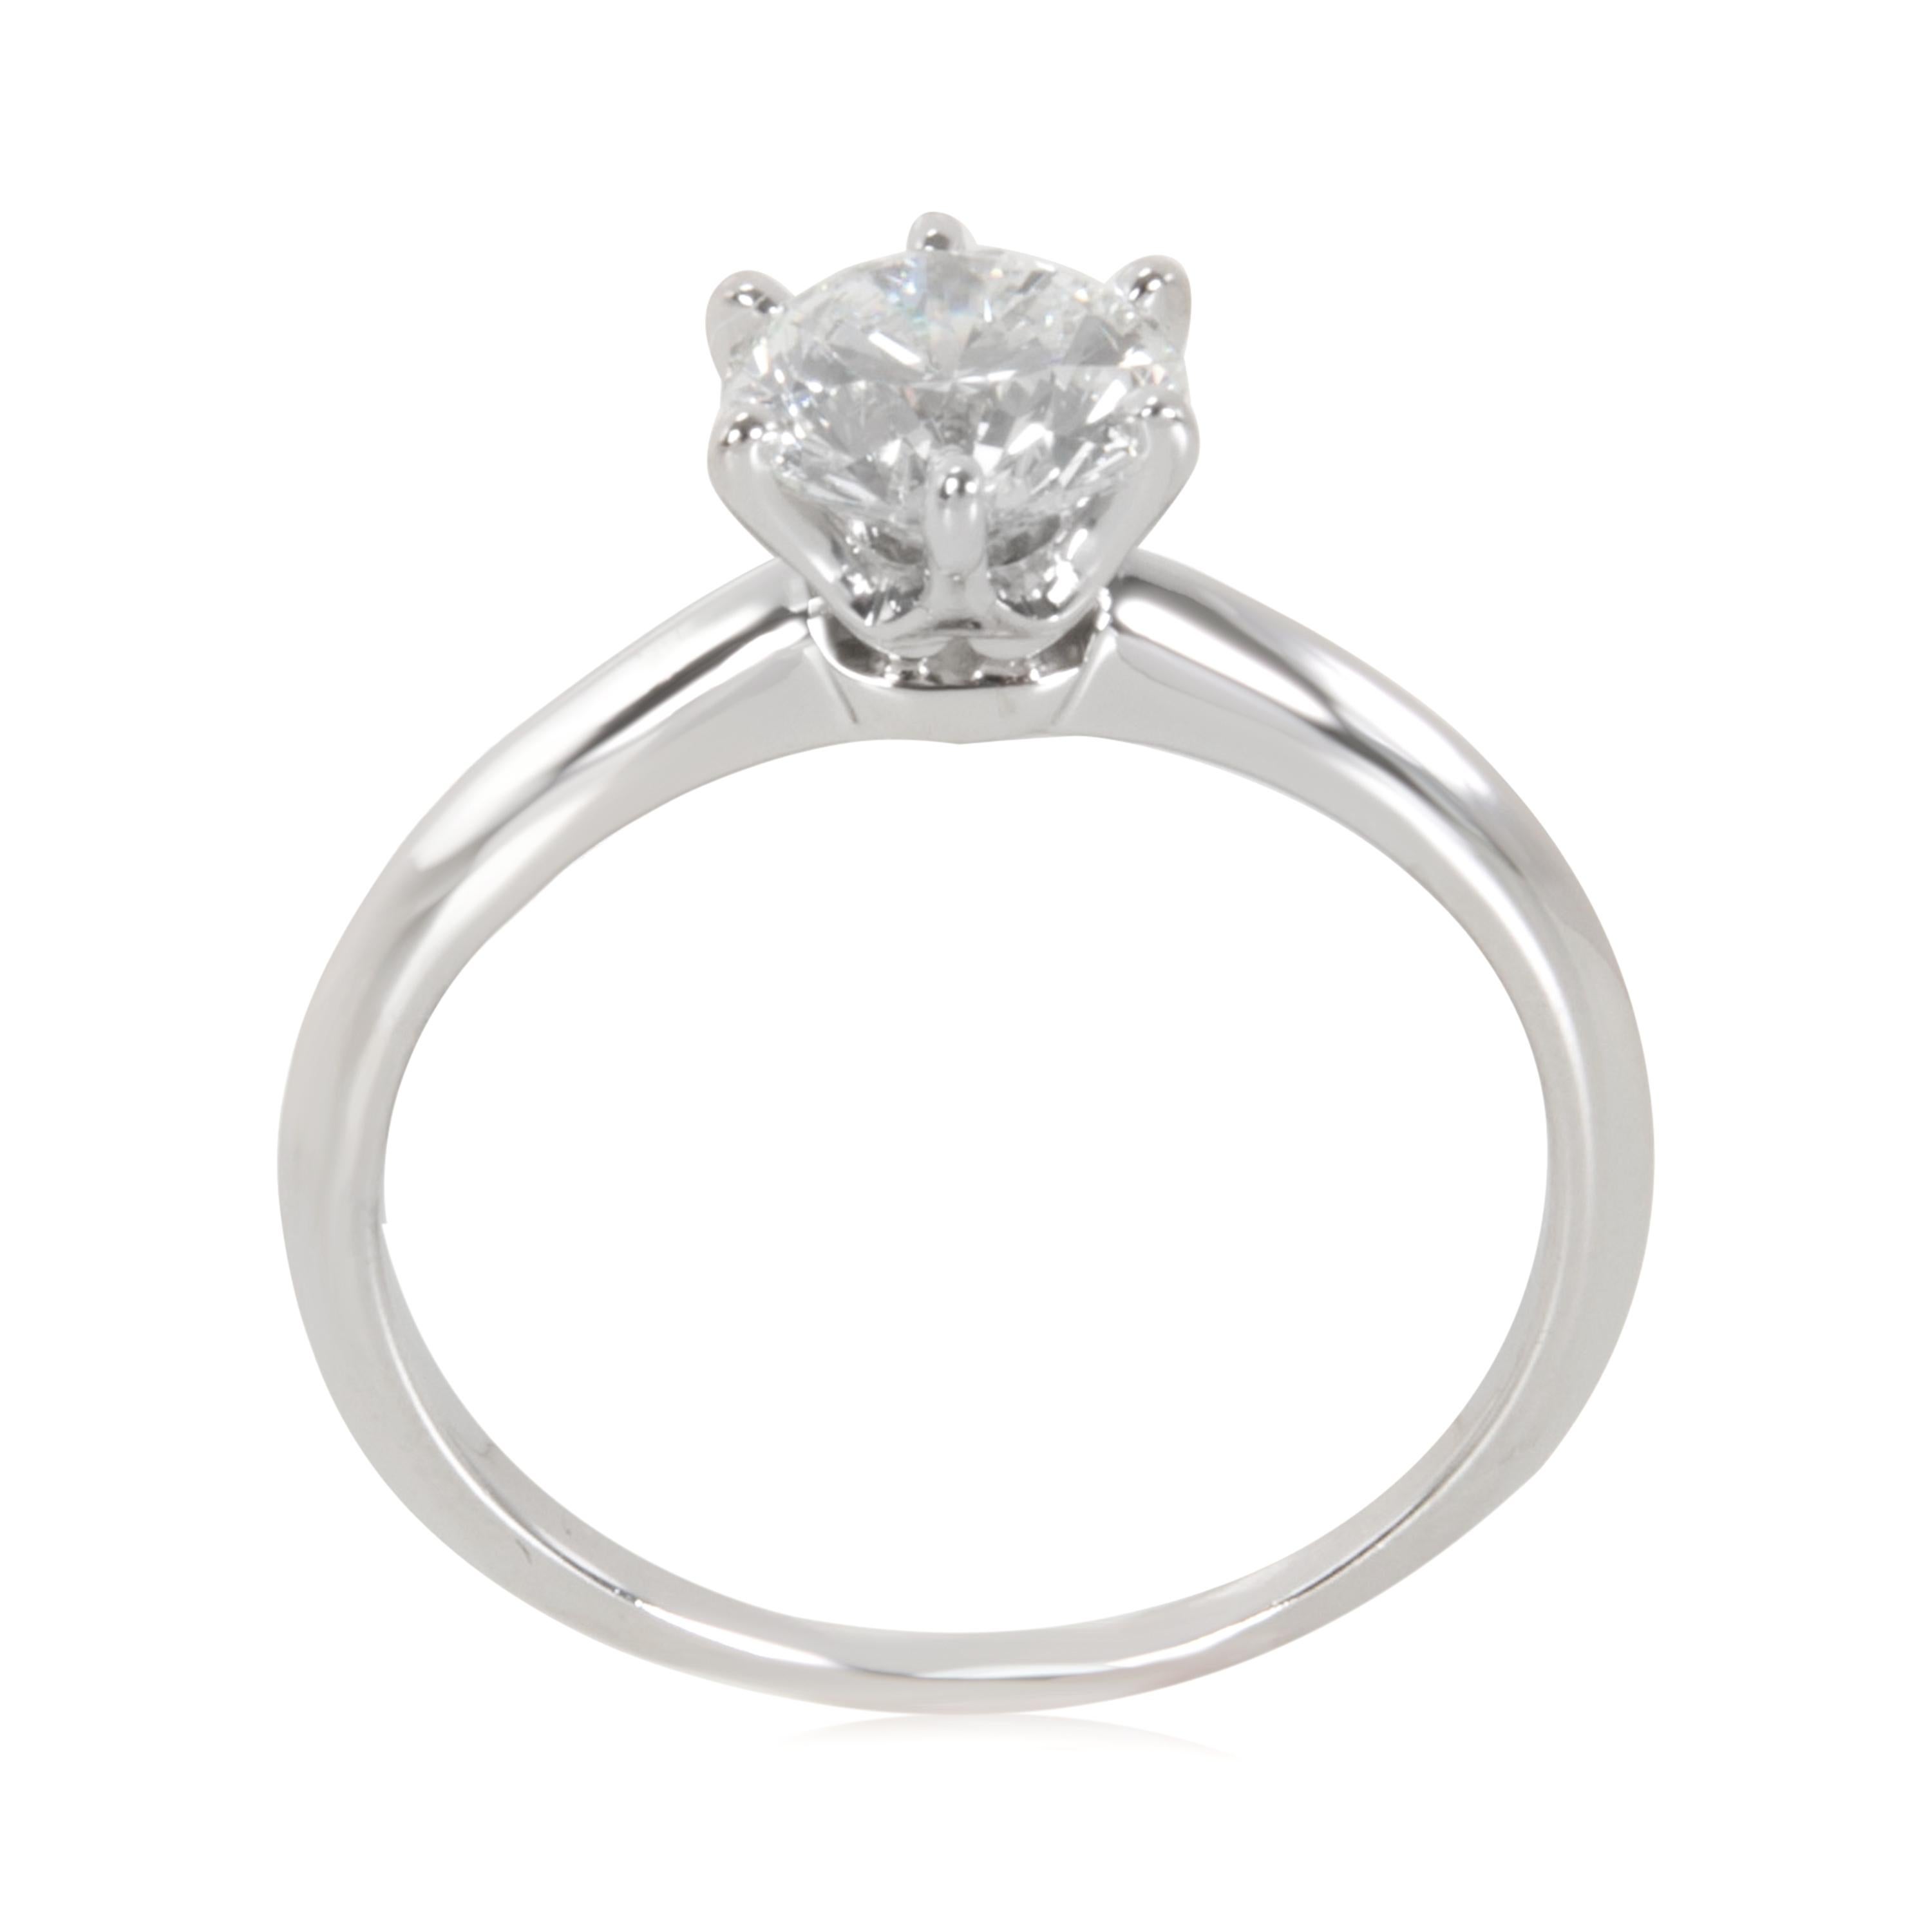 Round Cut Tiffany & Co. Diamond Solitaire Engagement Ring in Platinum F/VS2 '1.27 Carat'